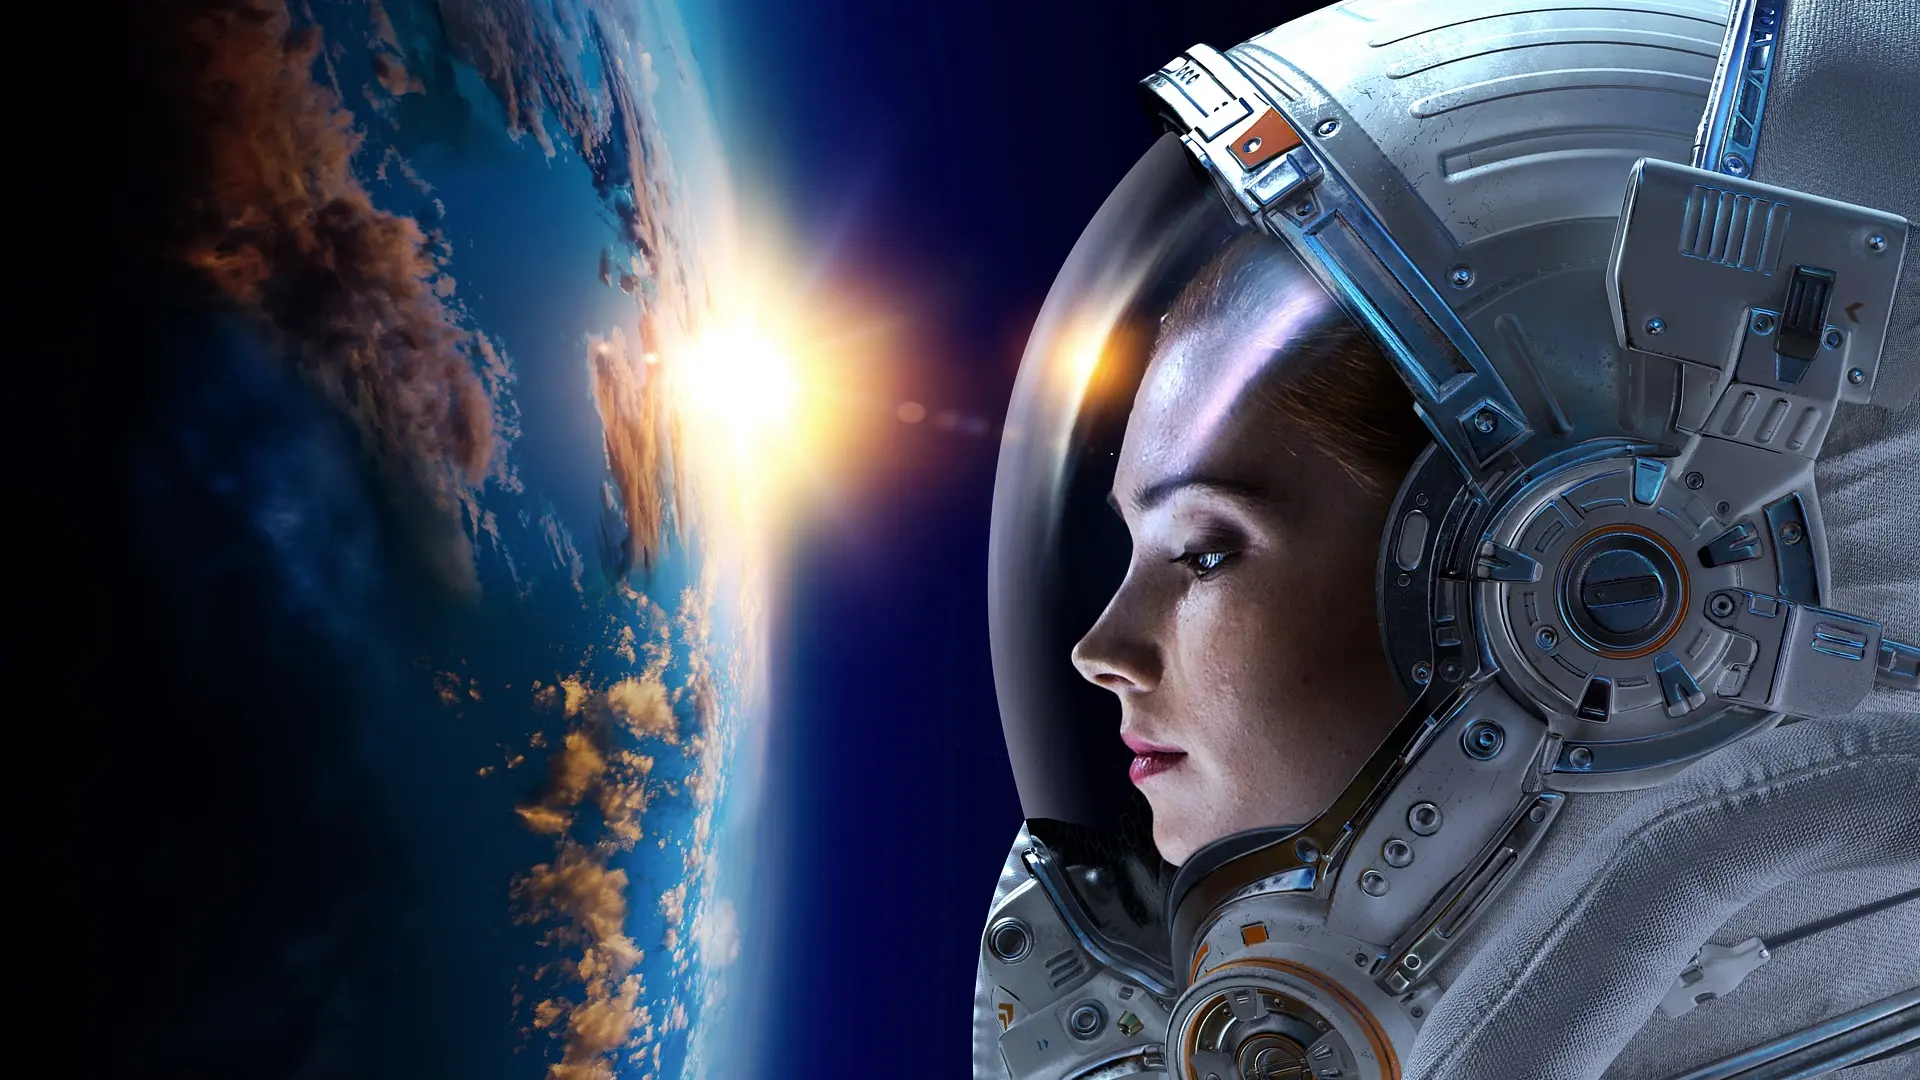 žena, svemir, univerzum, kosmos, astronautkinja, kosmonautkinja - shutterstock-6668a1e279ae9.webp